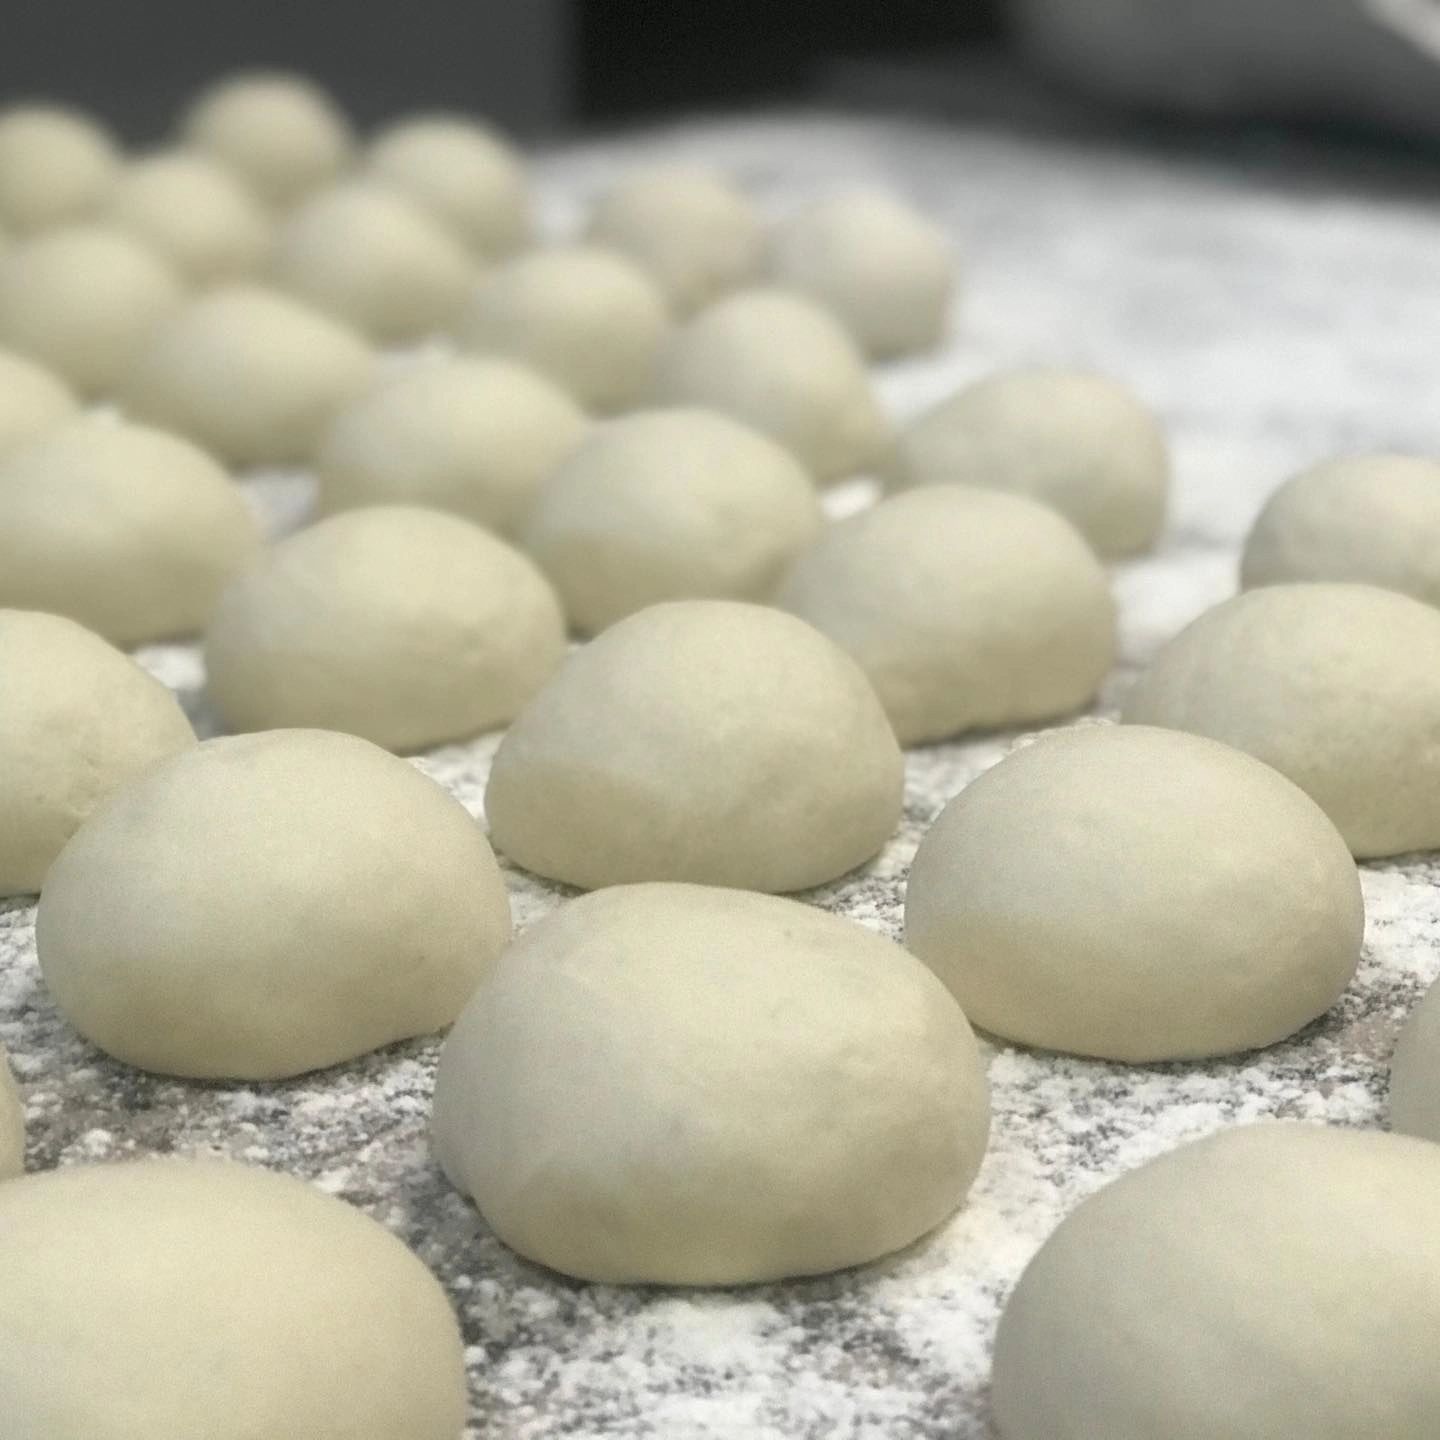 New doughs for baking